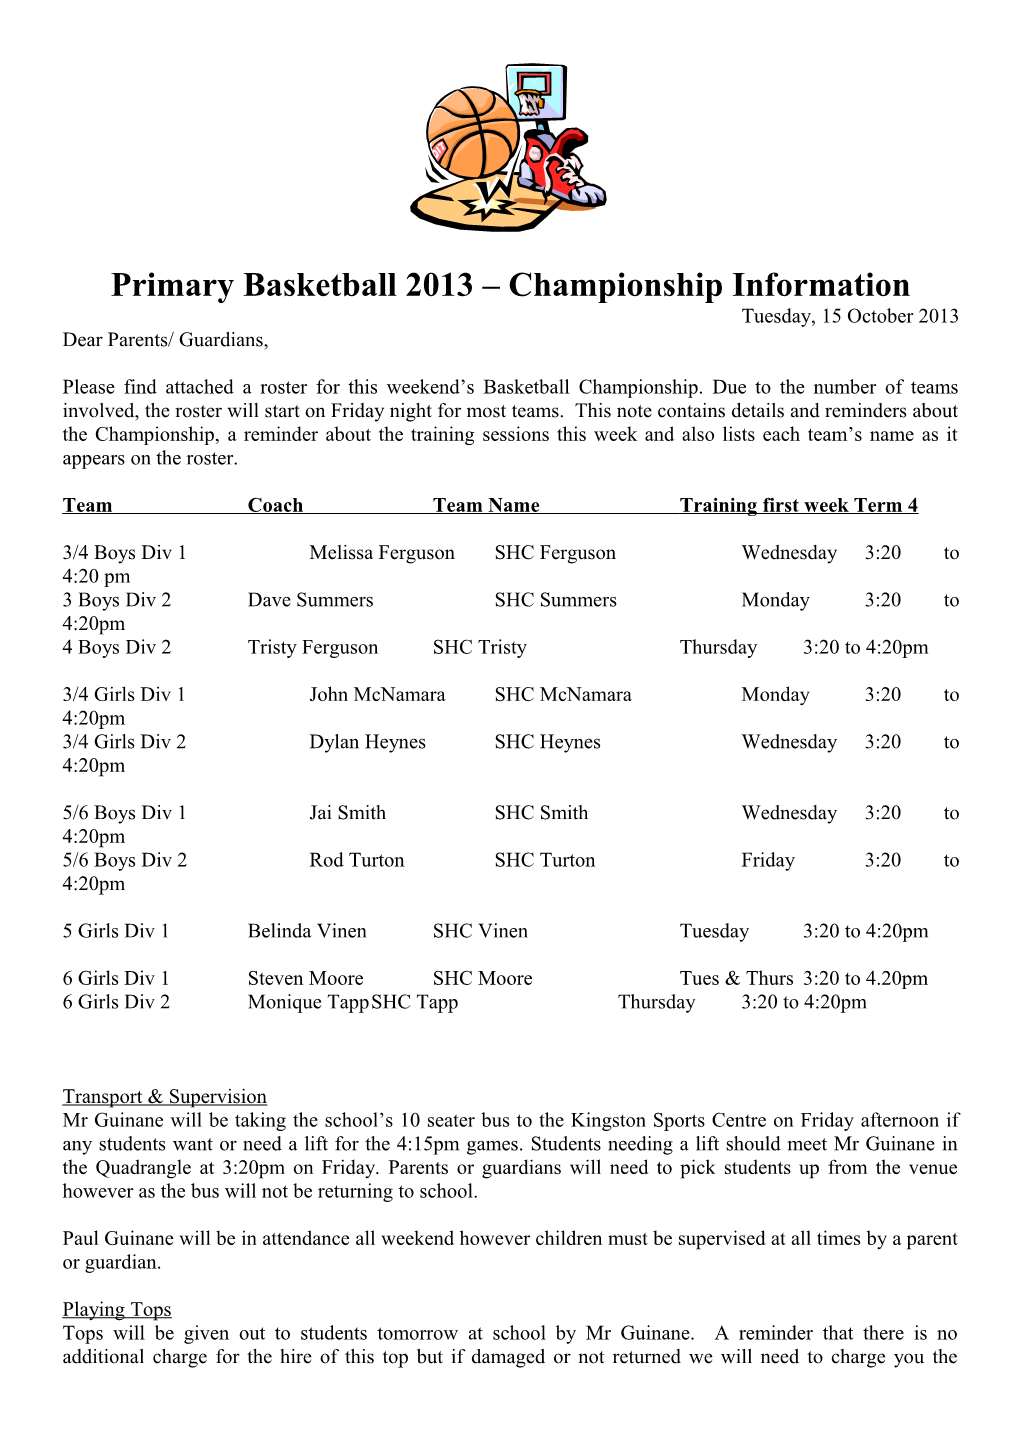 Primary Basketball 2013 Championship Information